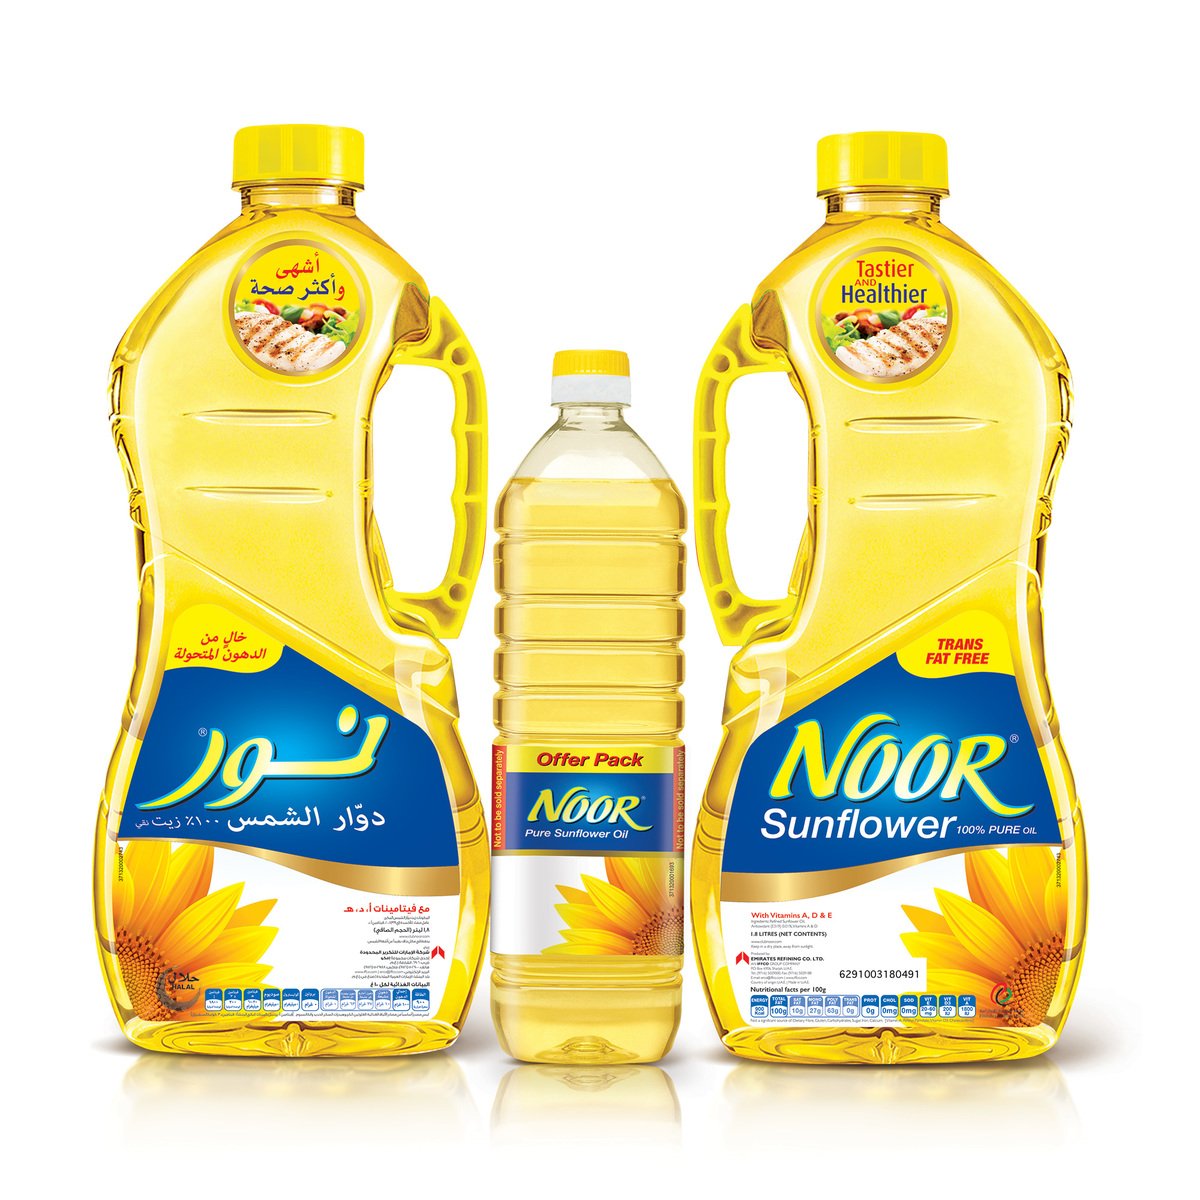 Noor 100% Pure Sunflower Oil Promo 2 x 1.8 Litres + 750 ml